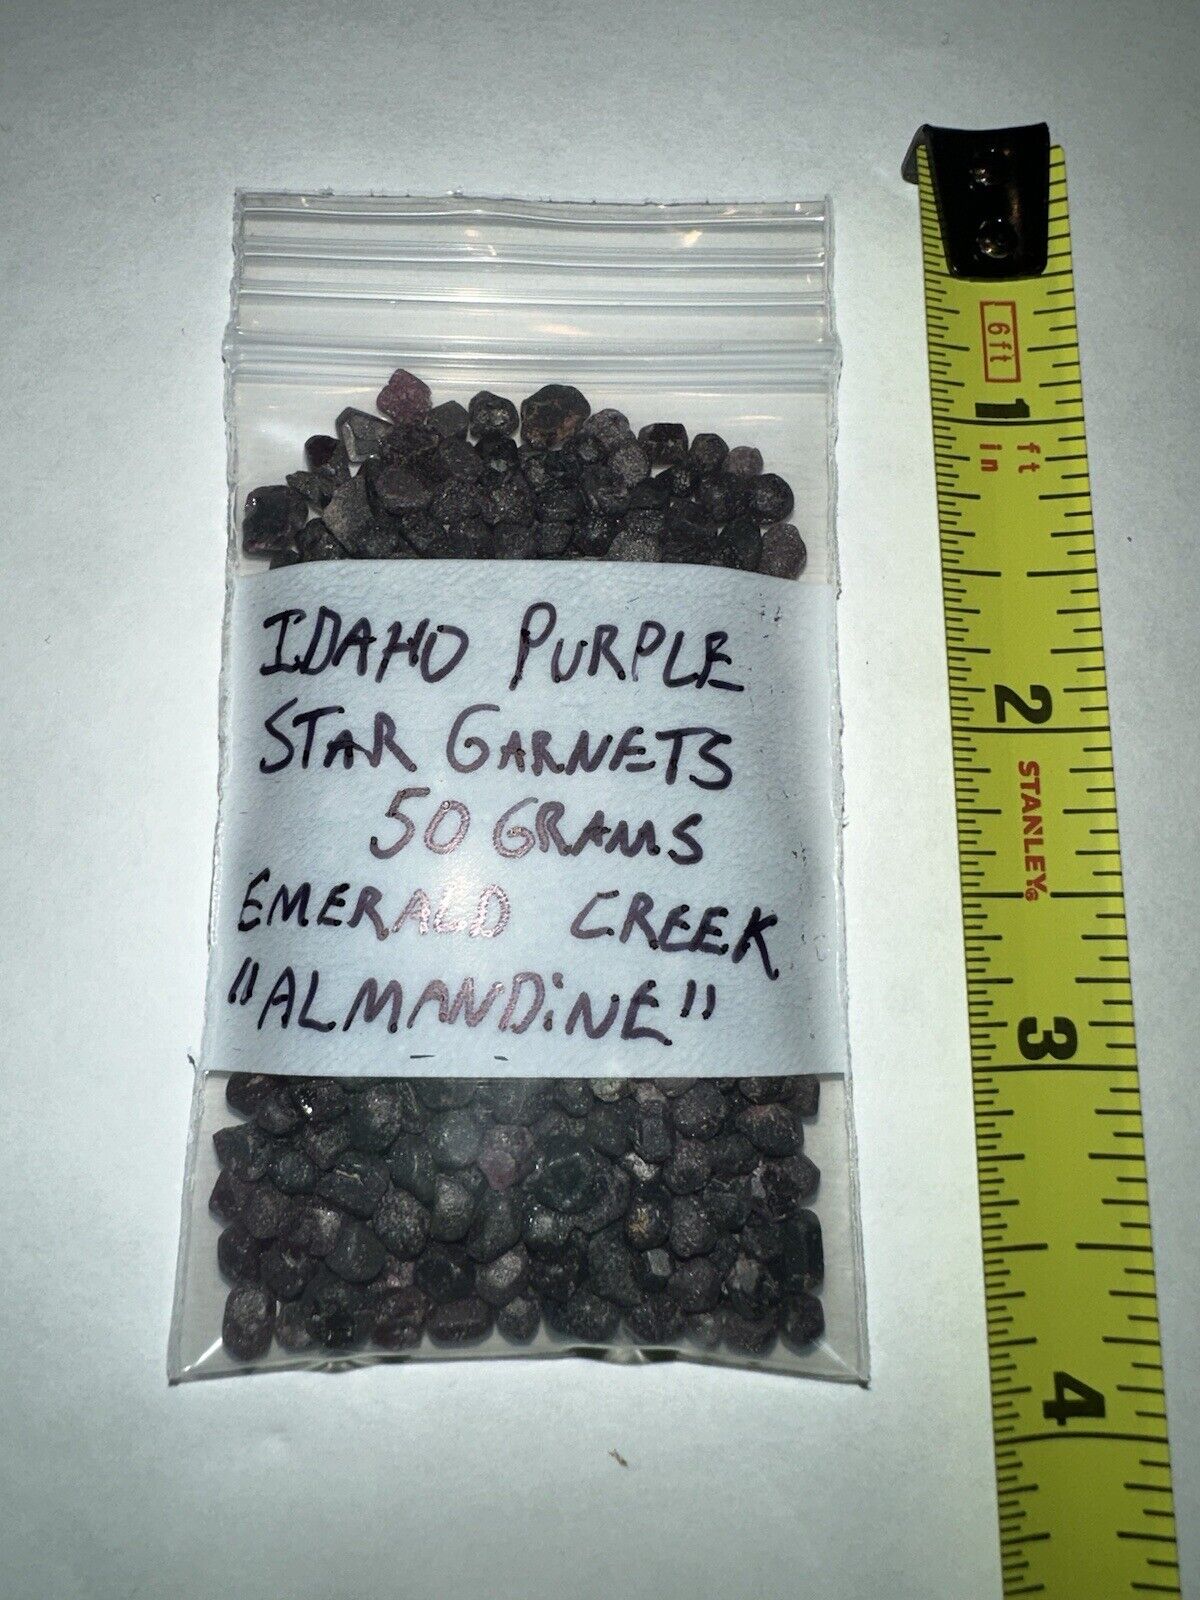 Idaho Purple Star Garnets 50 Grams Emerald Creek, Almandine Garnet Rough